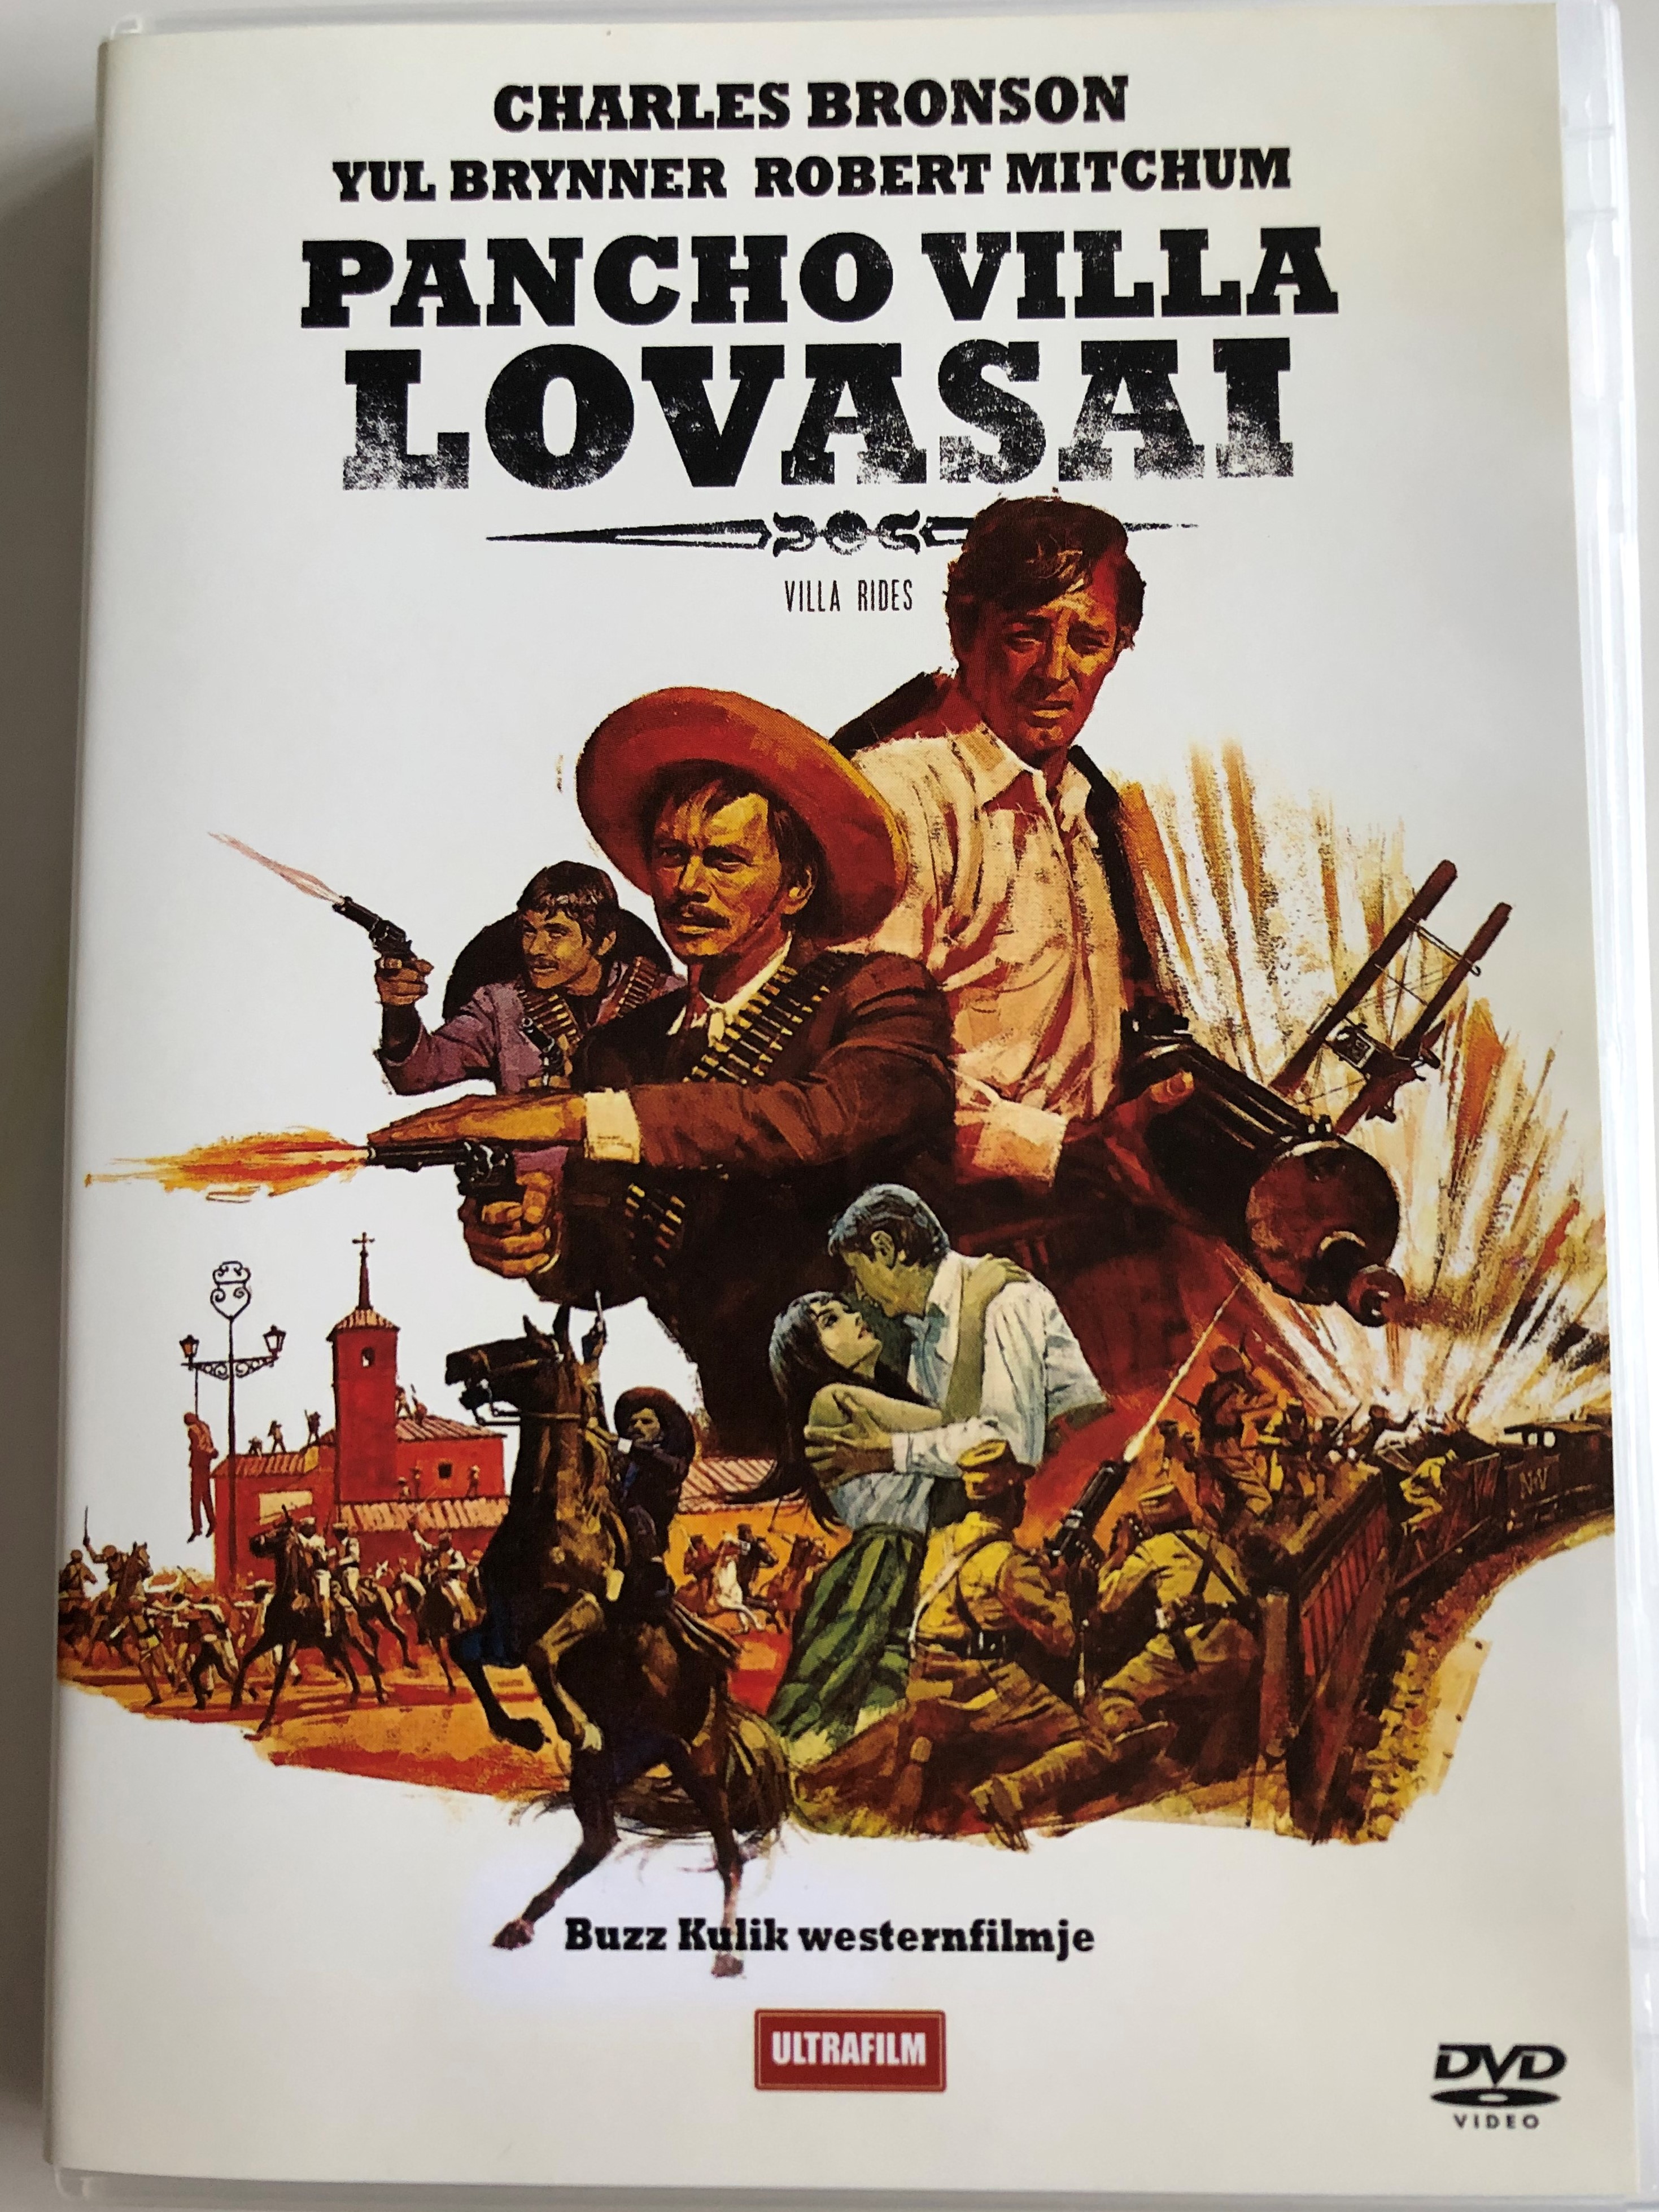 Villa Rides DVD 1968 Pancho Villa Lovasai / Directed by Buzz Kulik /  Starring: Yul Brynner, Robert Mitchum, Charles Bronson - bibleinmylanguage